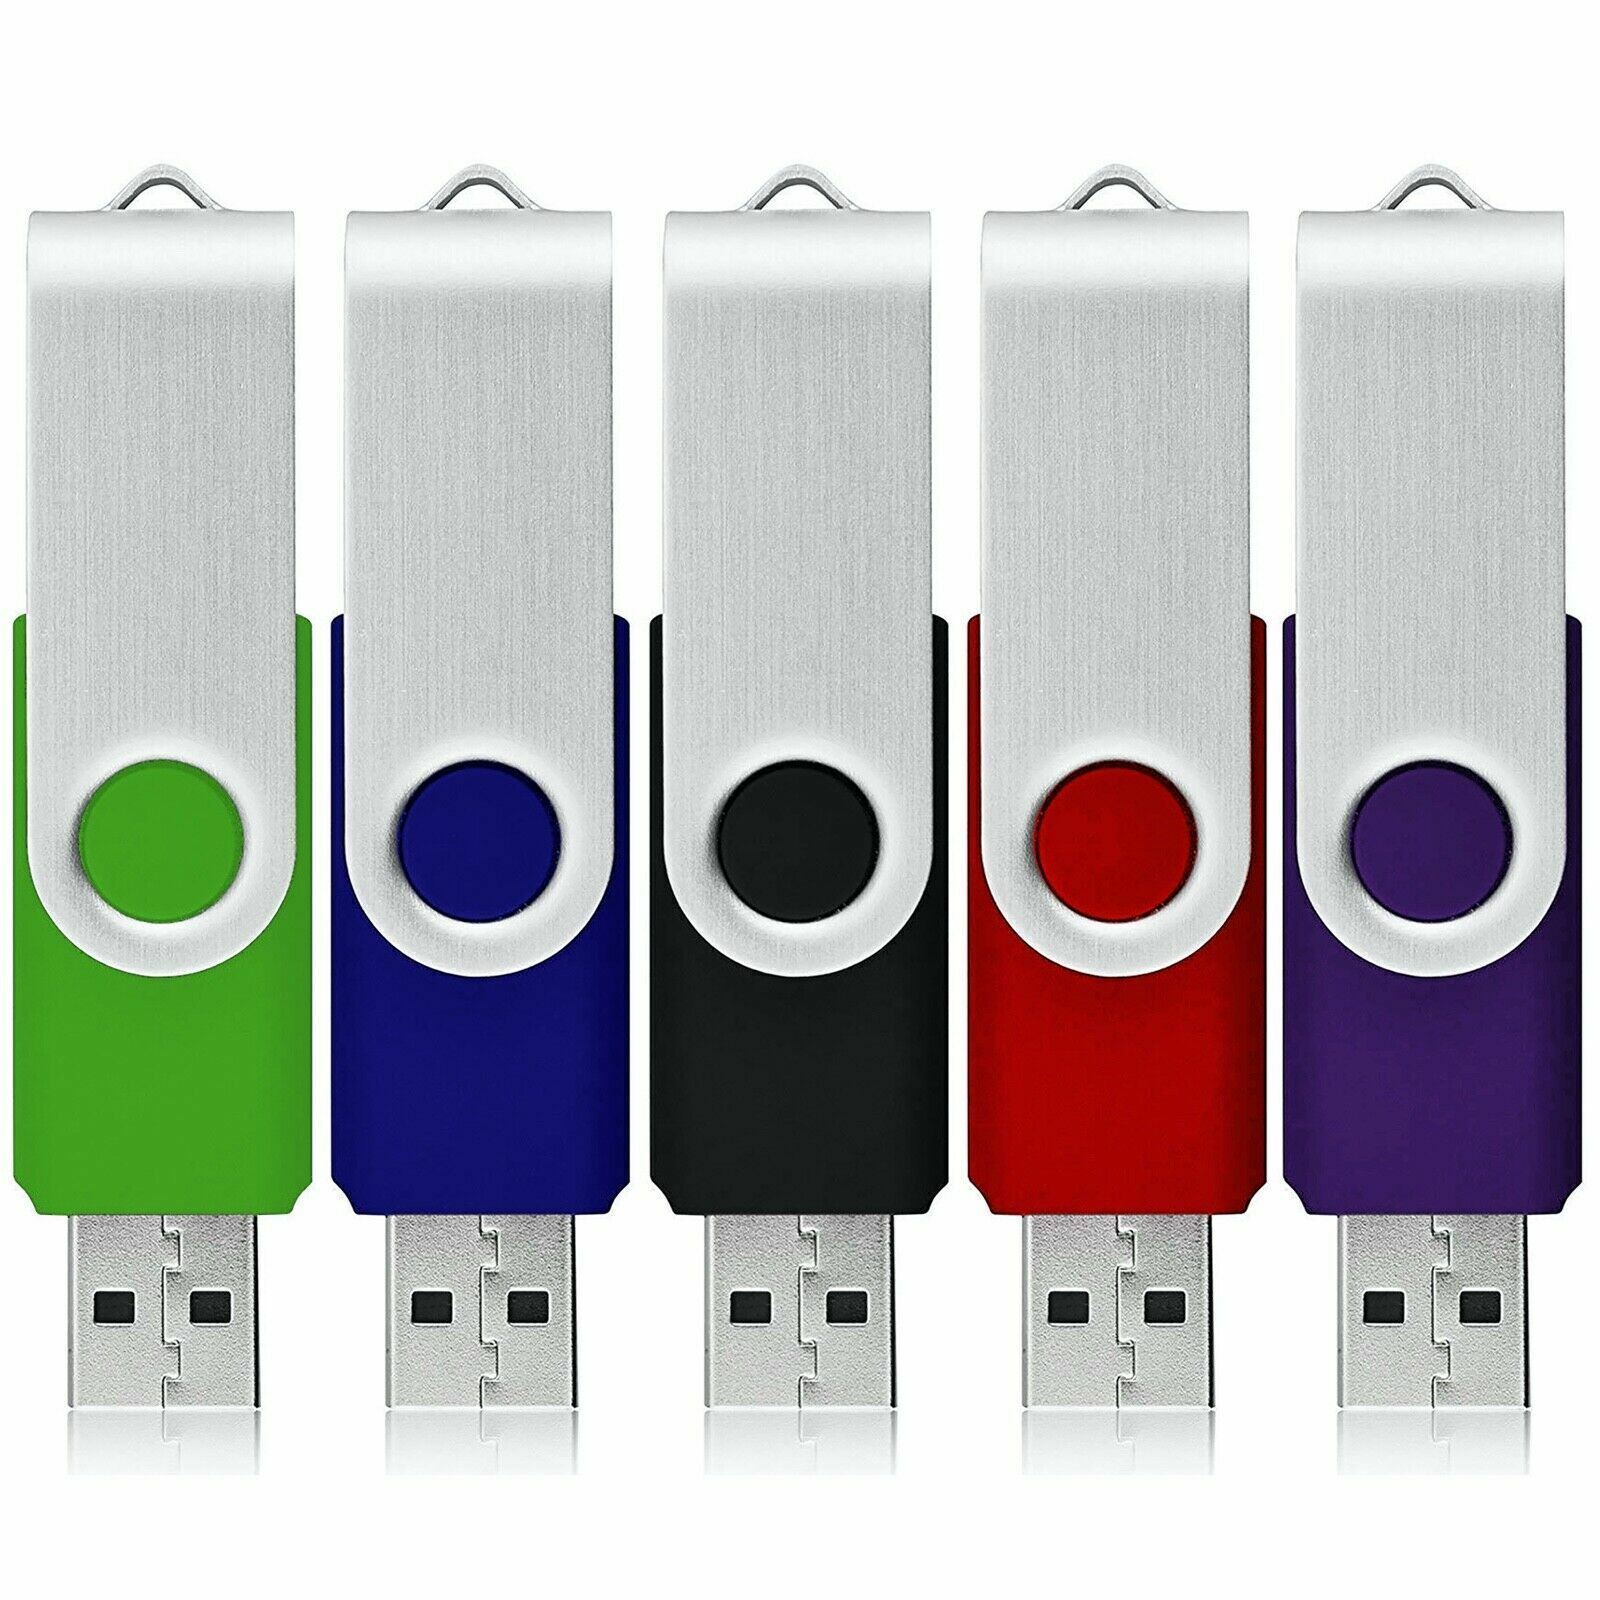 New ZIPPY USB Flash Drive Memory Stick Multicolored Thumb Drive 1GB-128GB LOT